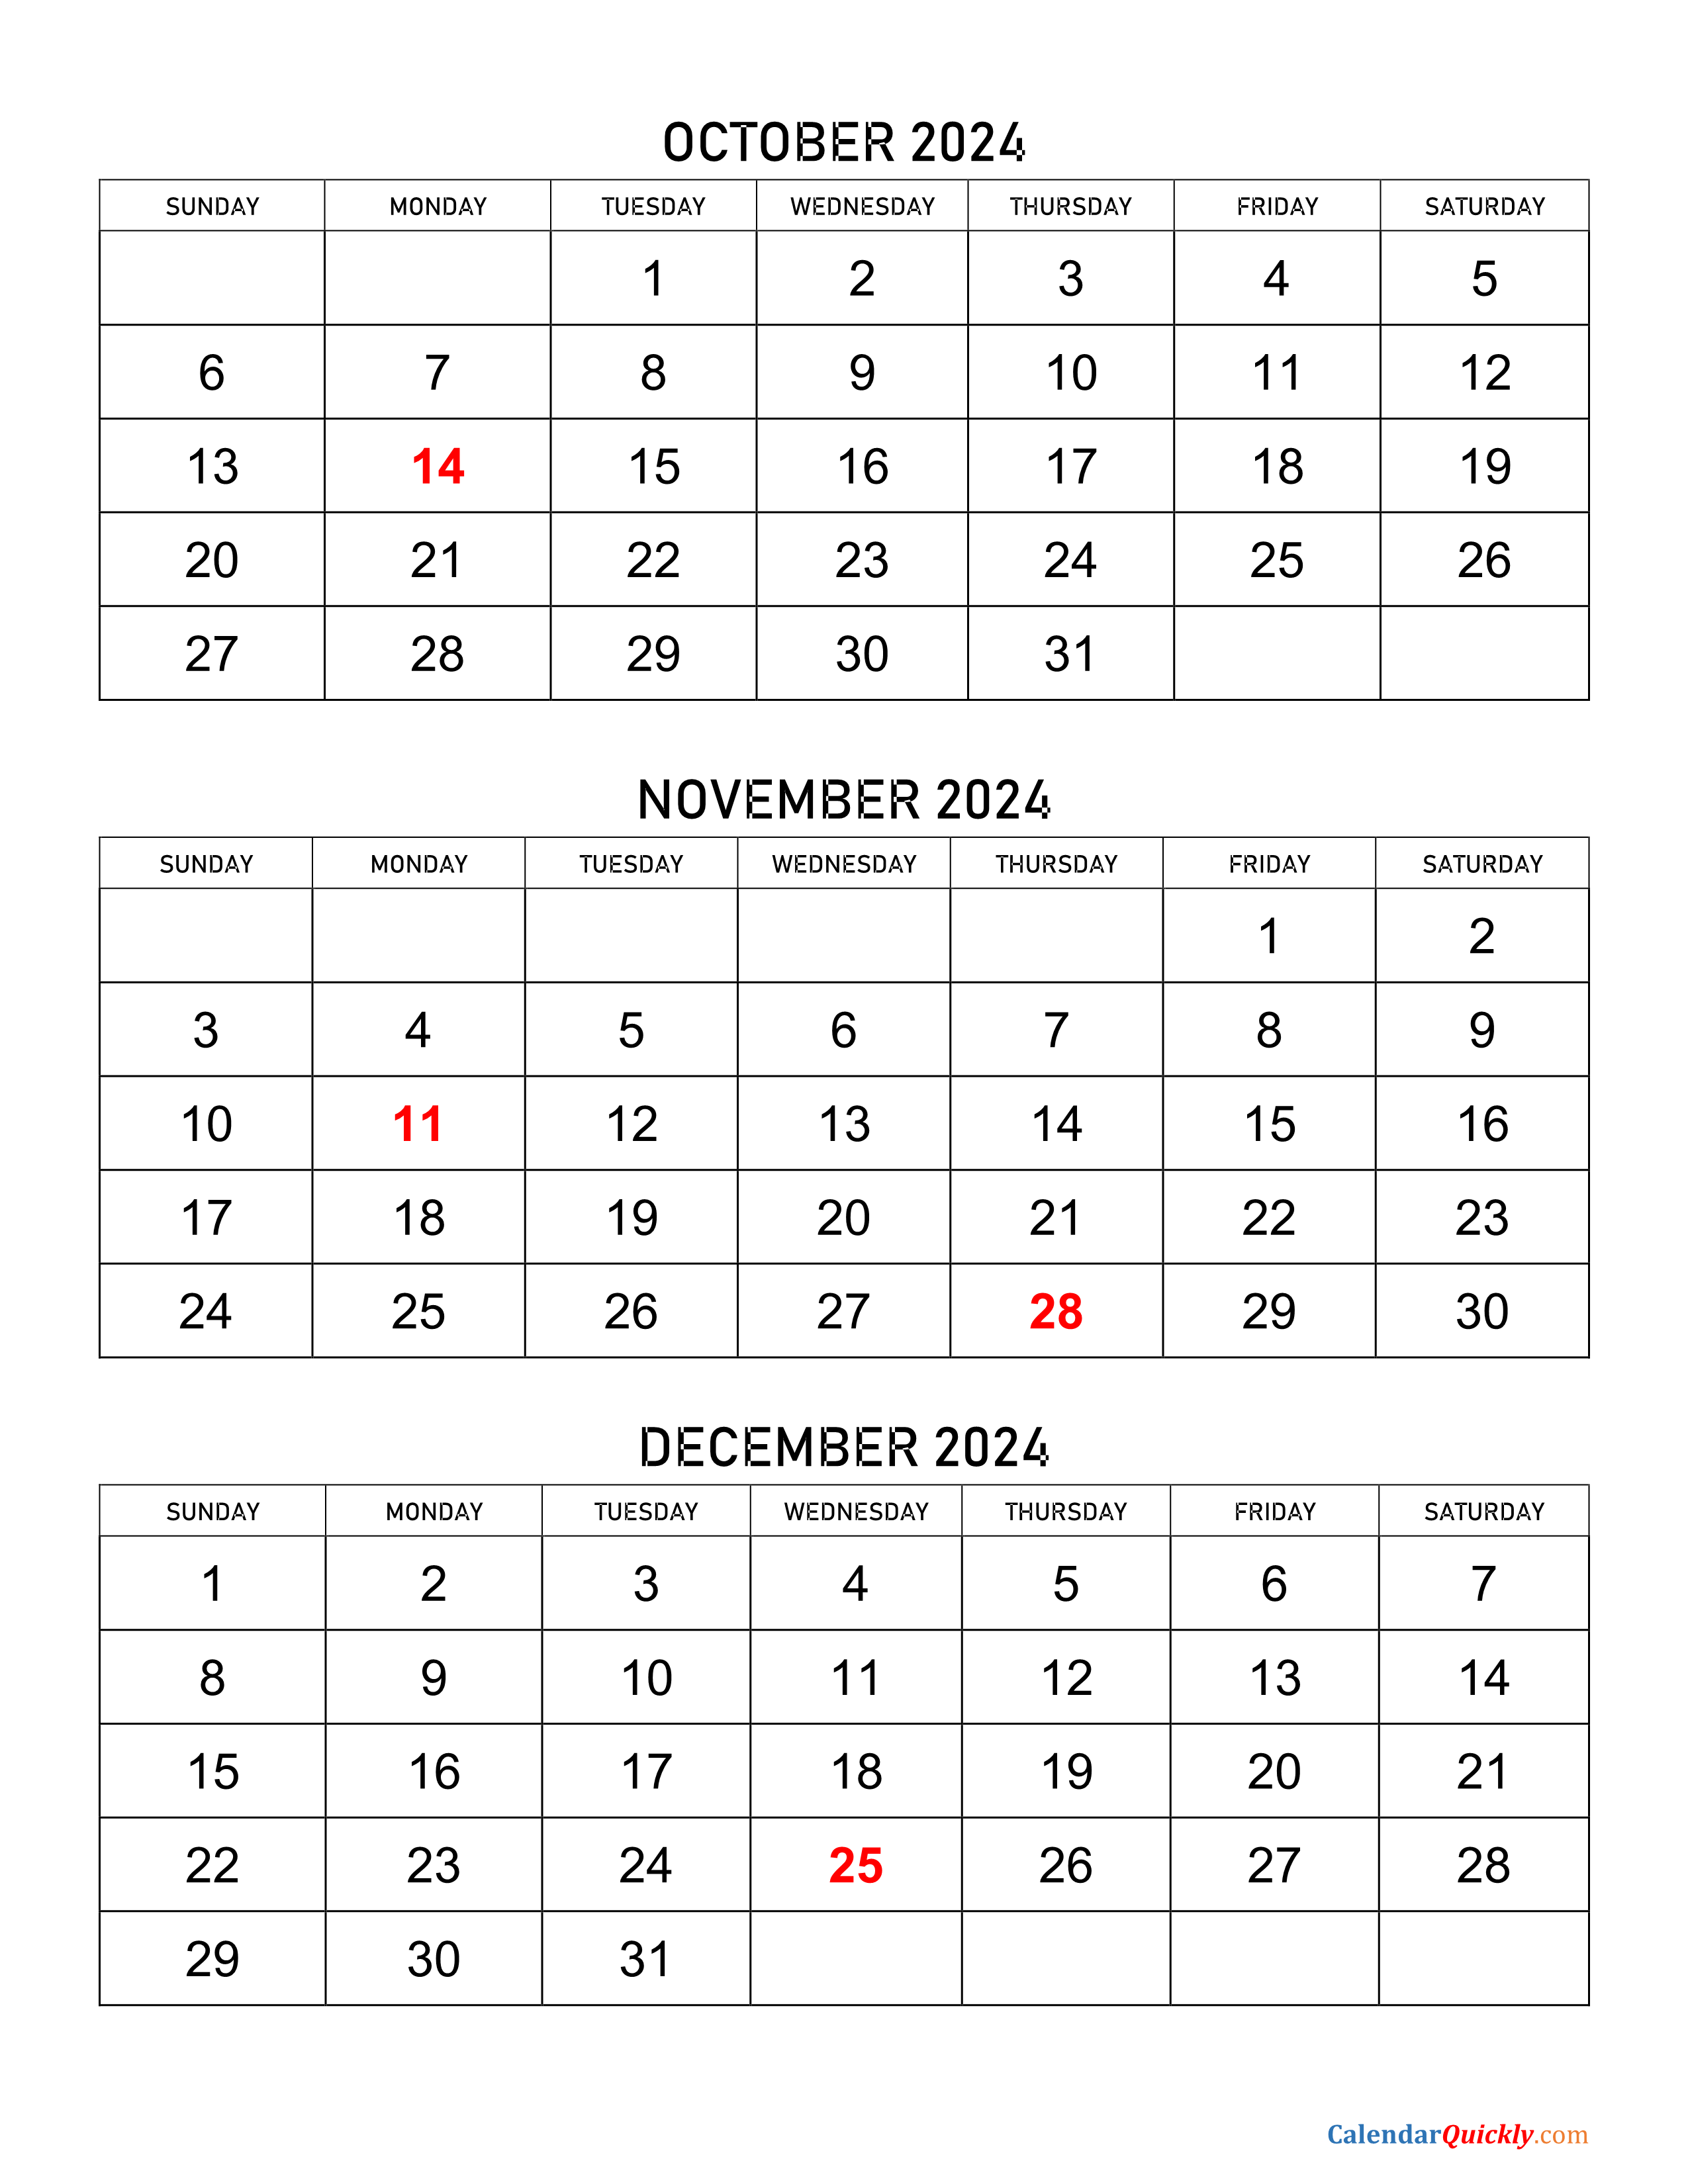 2024 October November December Calendar Printable 2024 CALENDAR PRINTABLE - Free Printable 2024 November And December Calendar